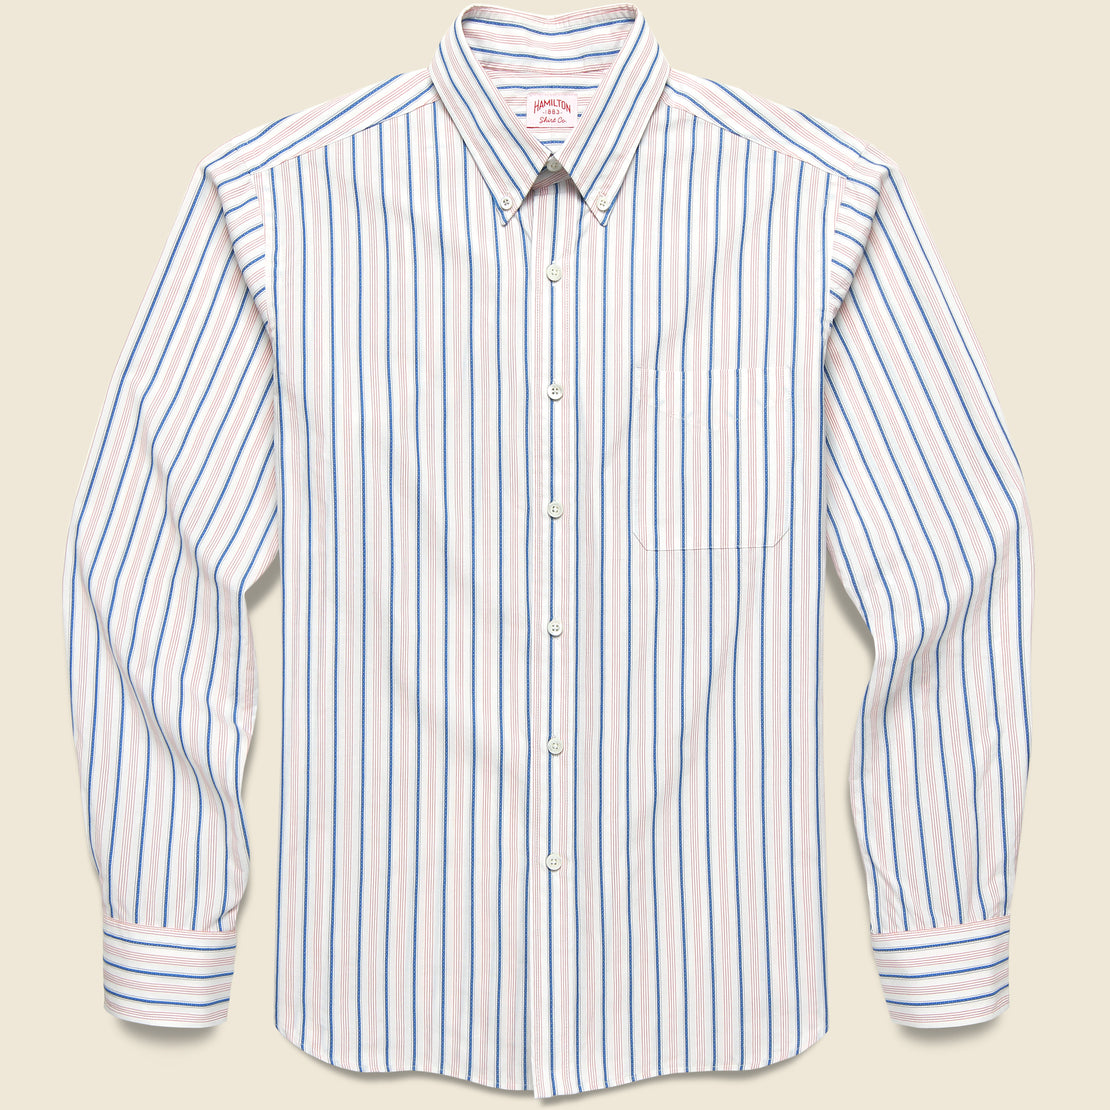 Hamilton Shirt Co. Textured Stripe Shirt - White/Cobalt/Dusty Rose